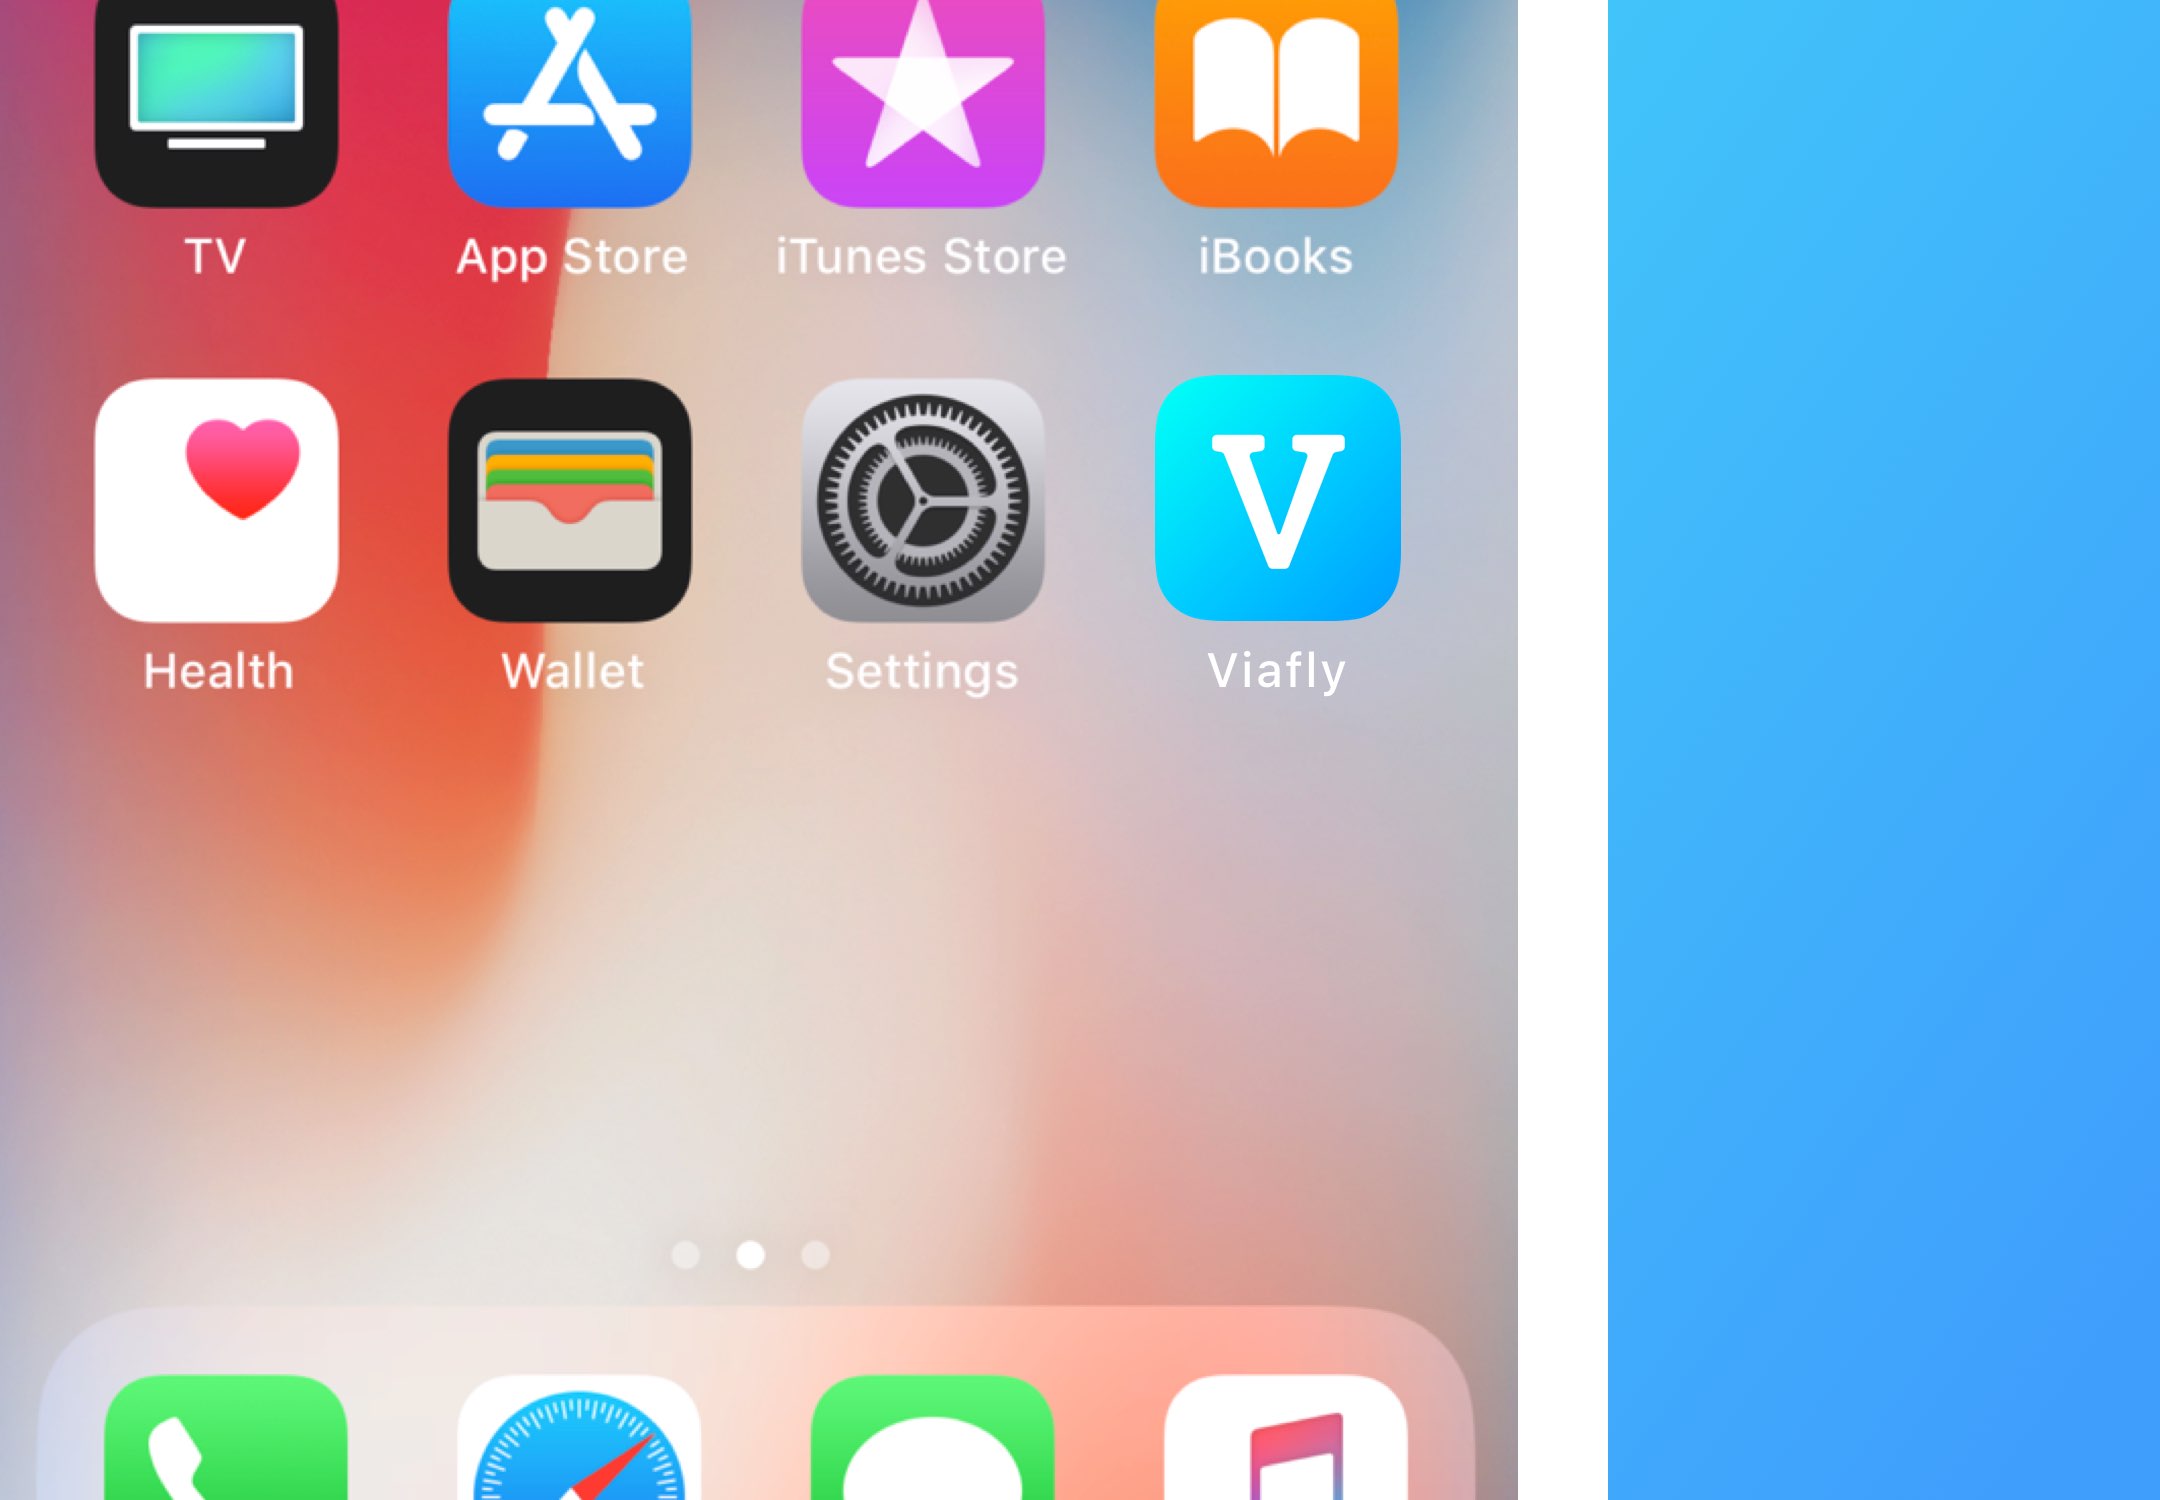 Viafly-app-icon-mockup@3x